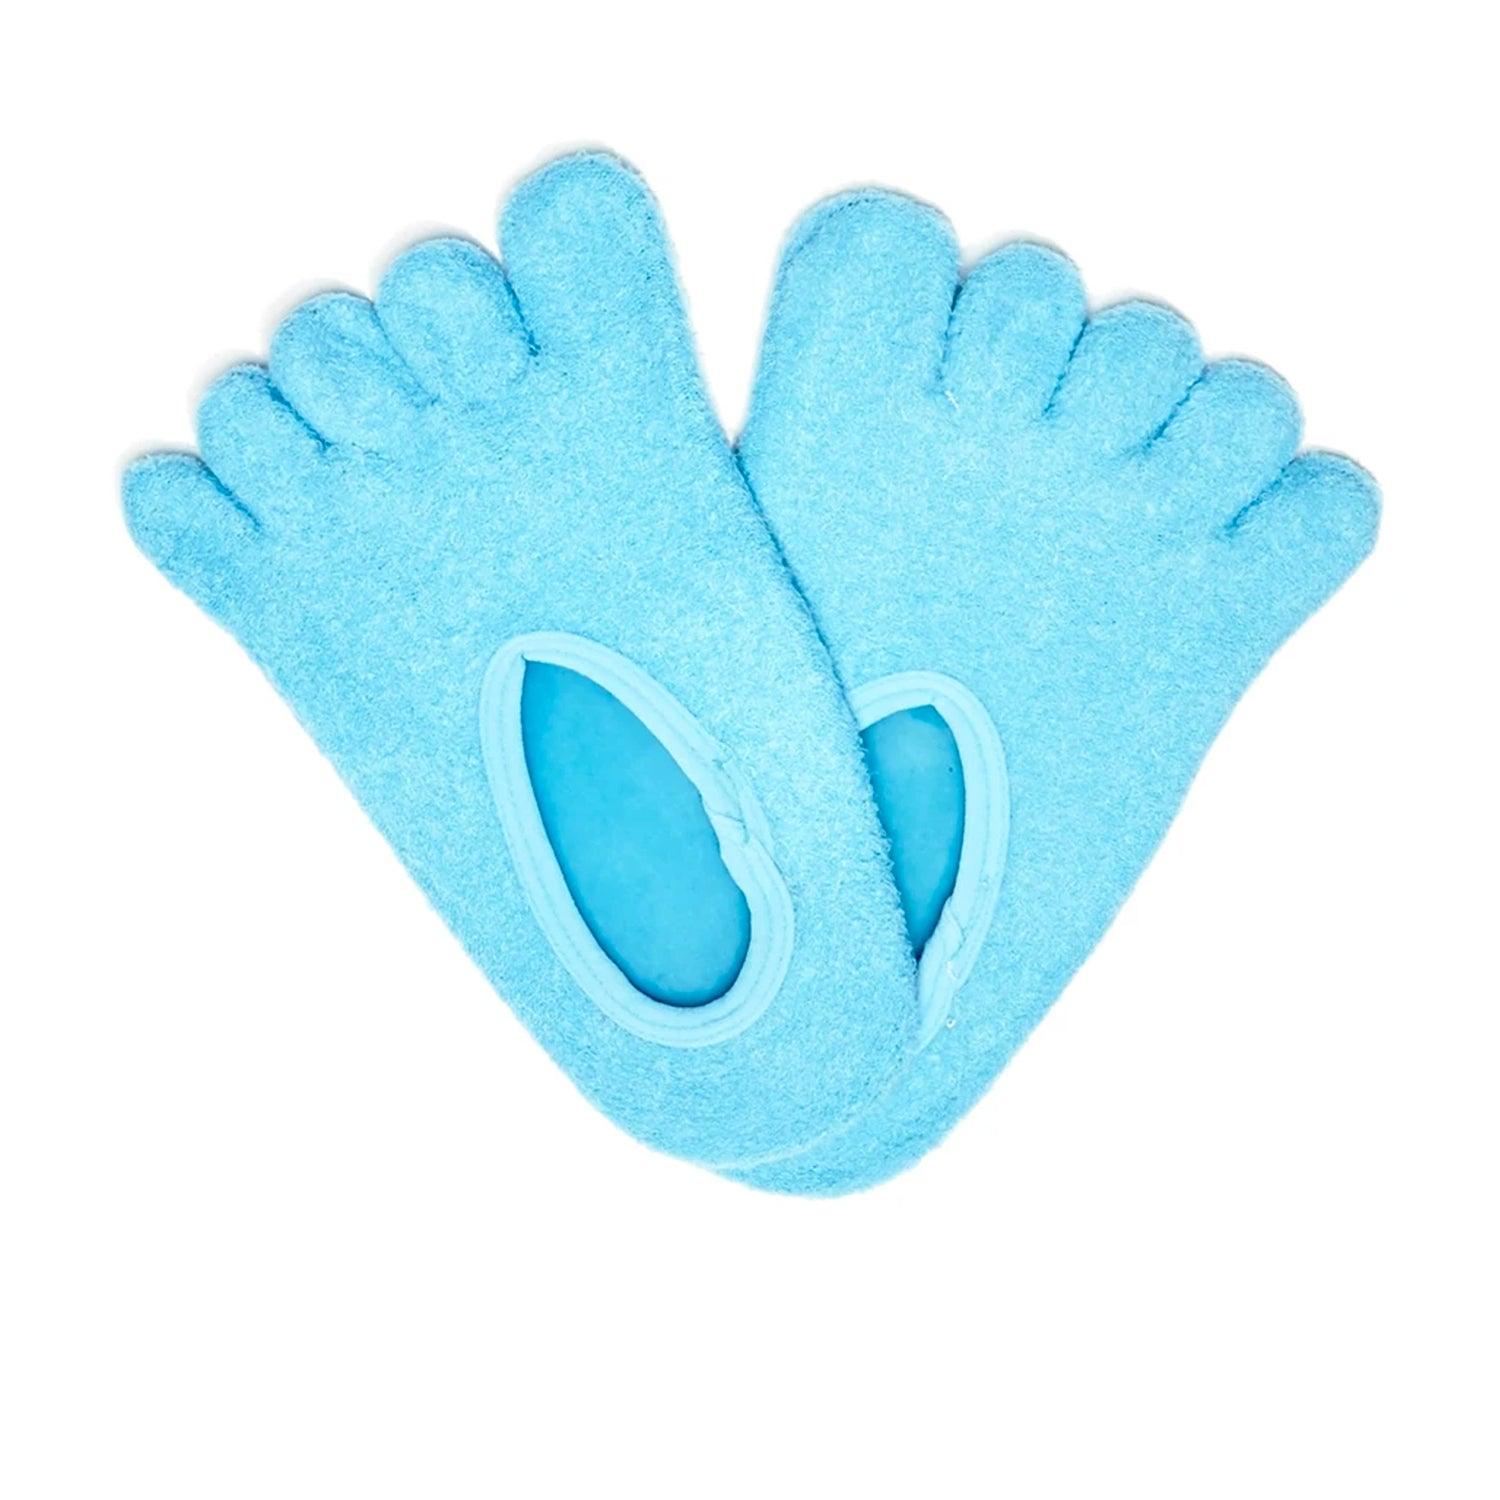 Five-Toe Gel Moisturizing Socks for dry feet